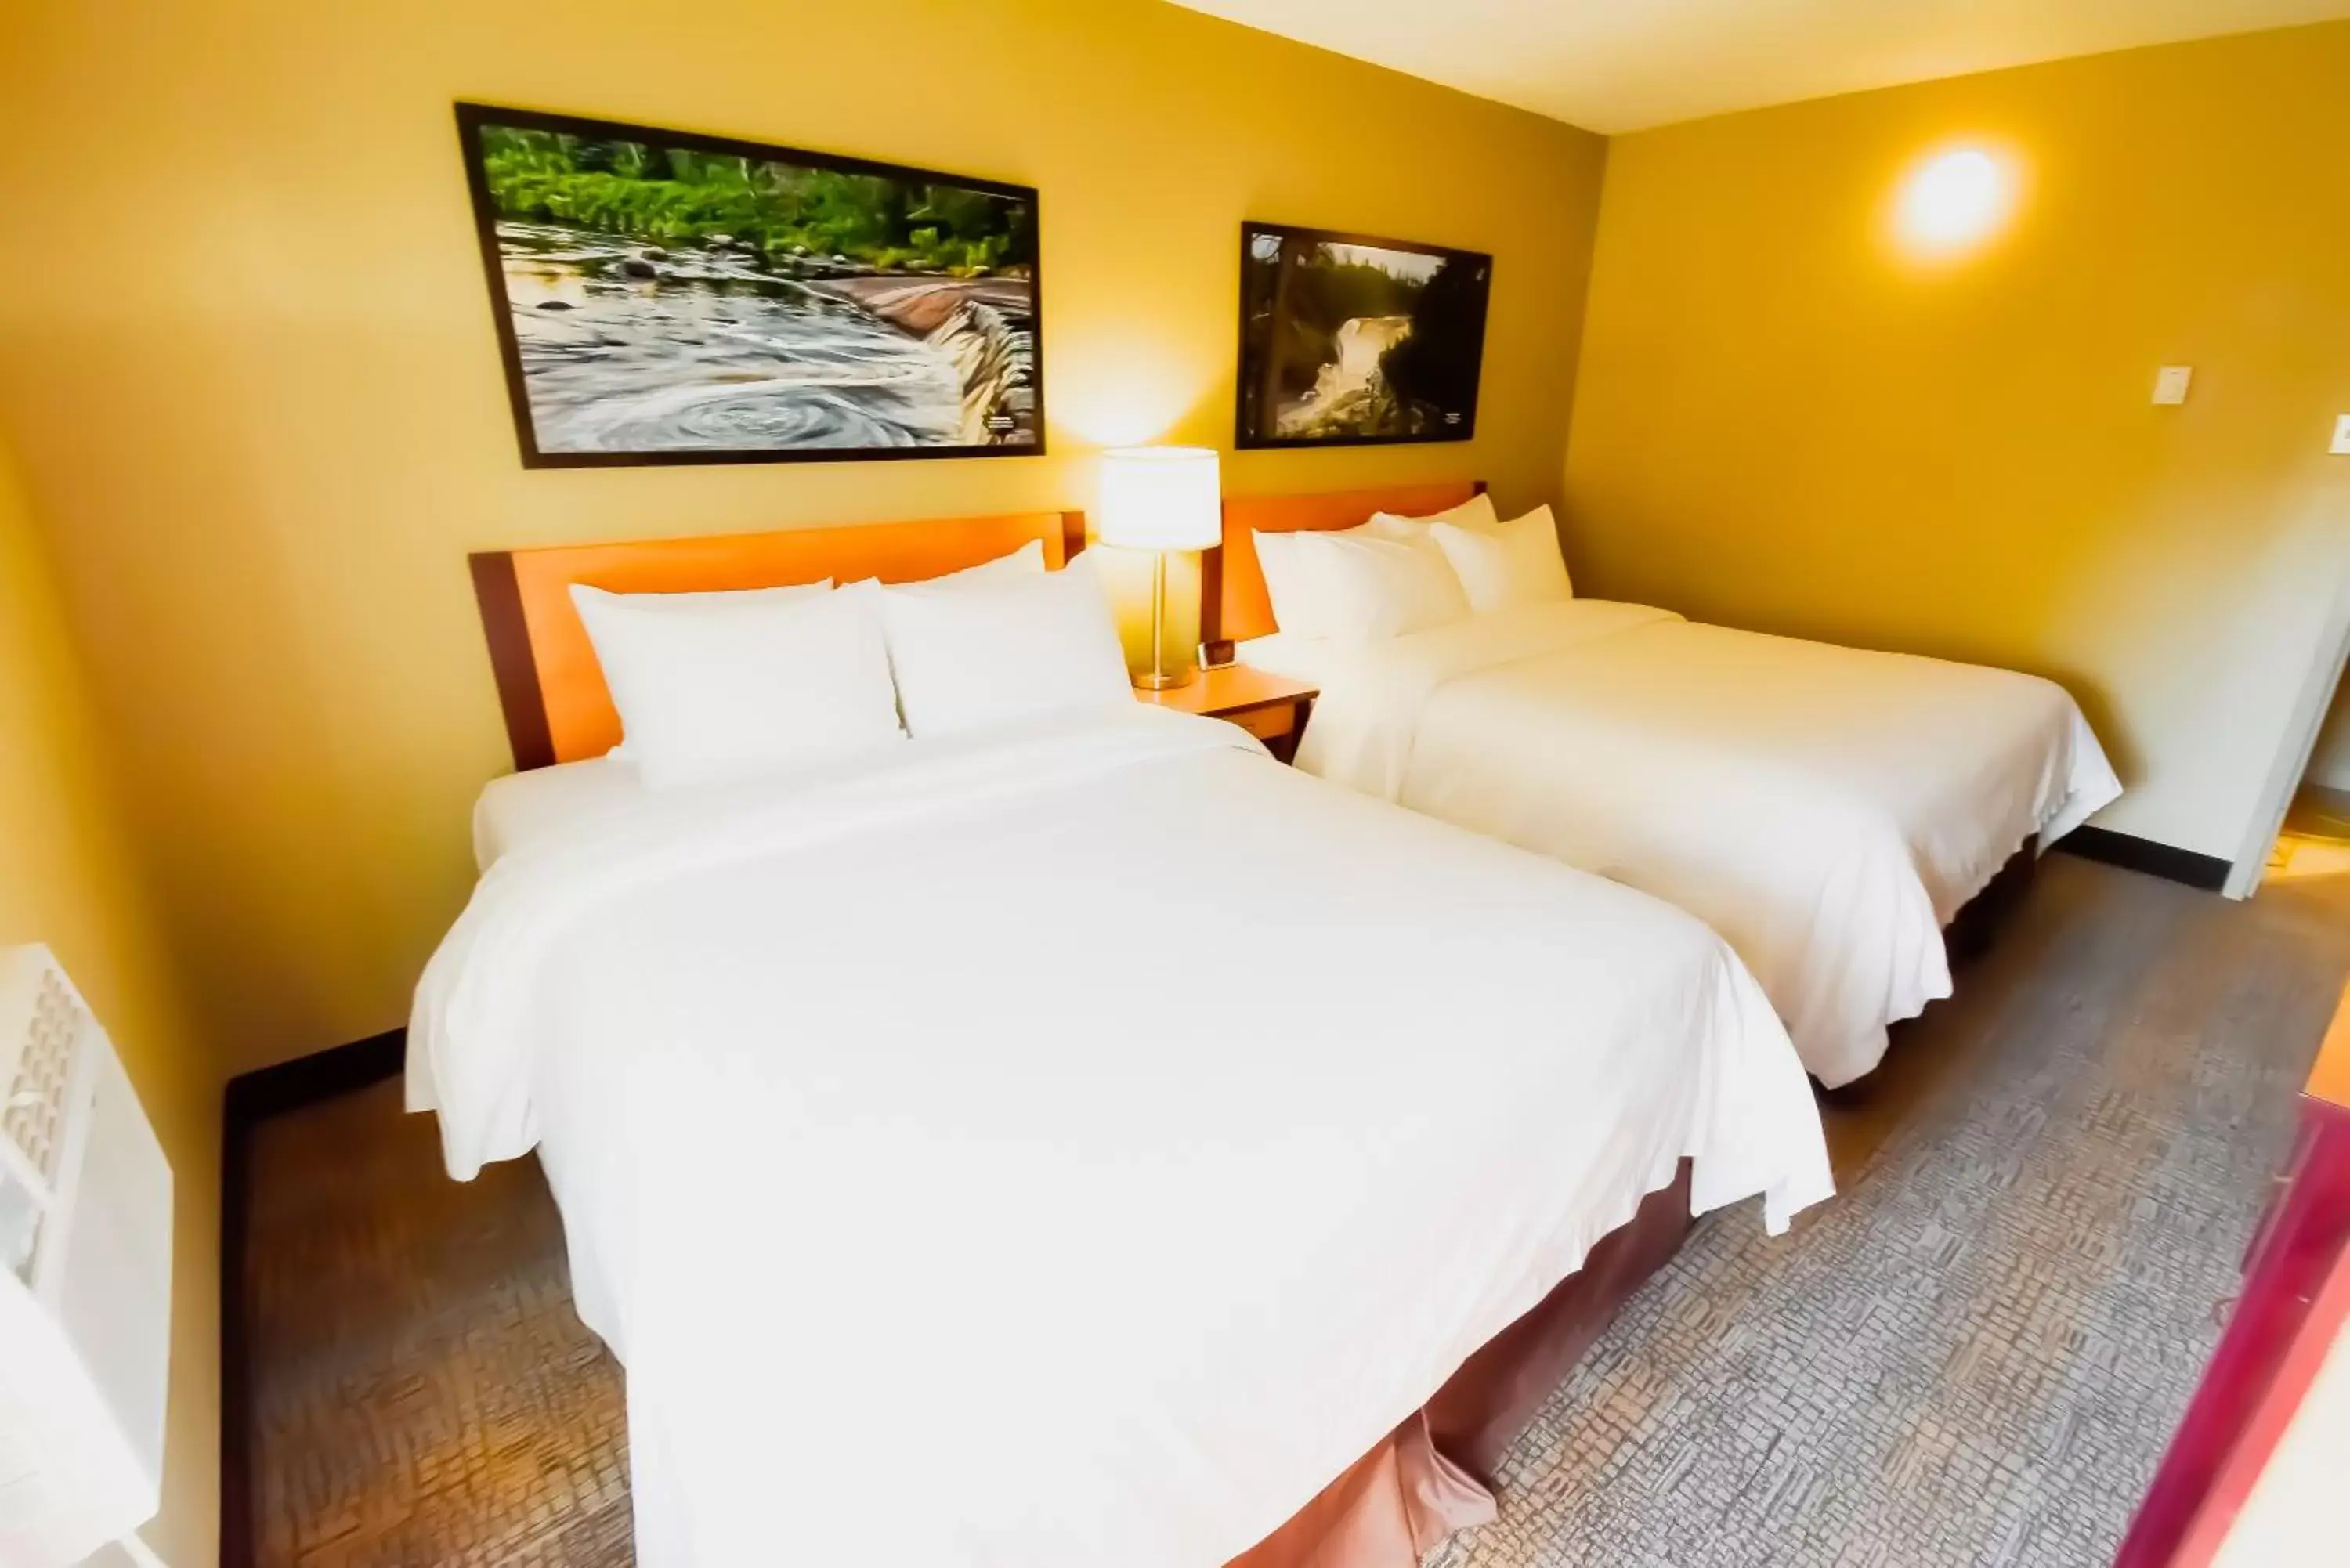 Bedroom, Bed in Canad Inns Destination Centre Windsor Park